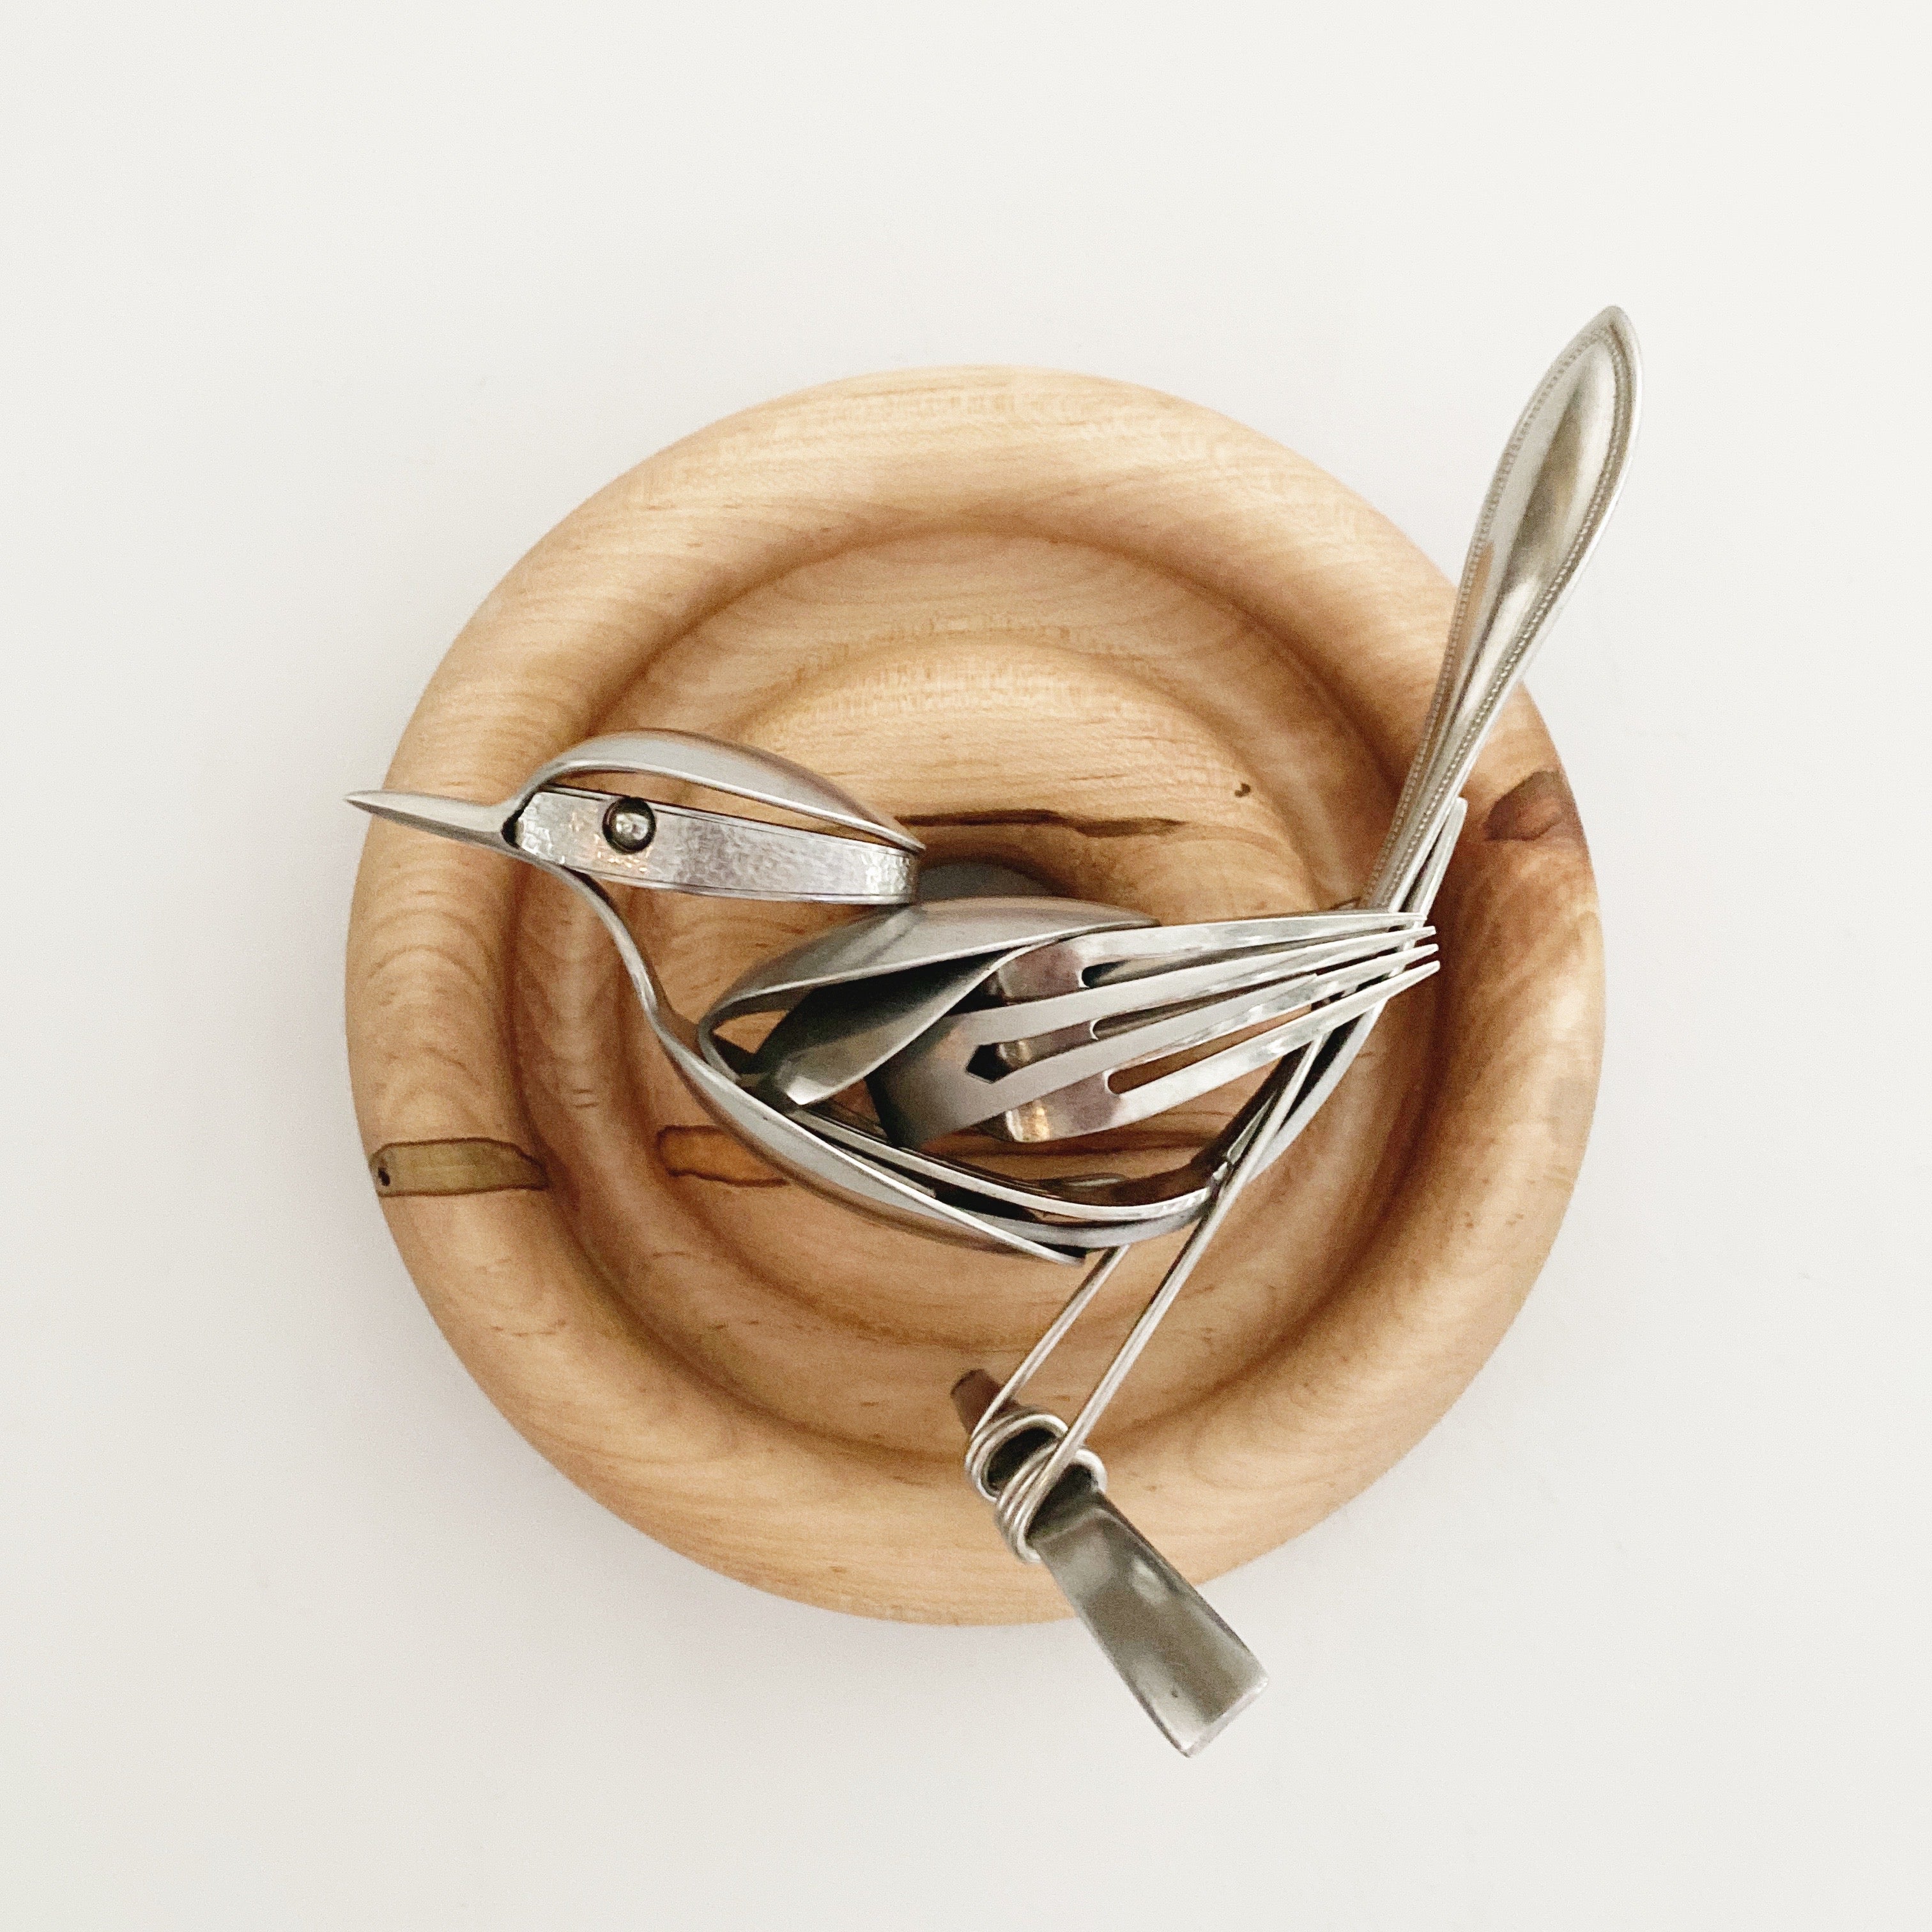 "Wilder" - Upcycled Metal Bird Sculpture